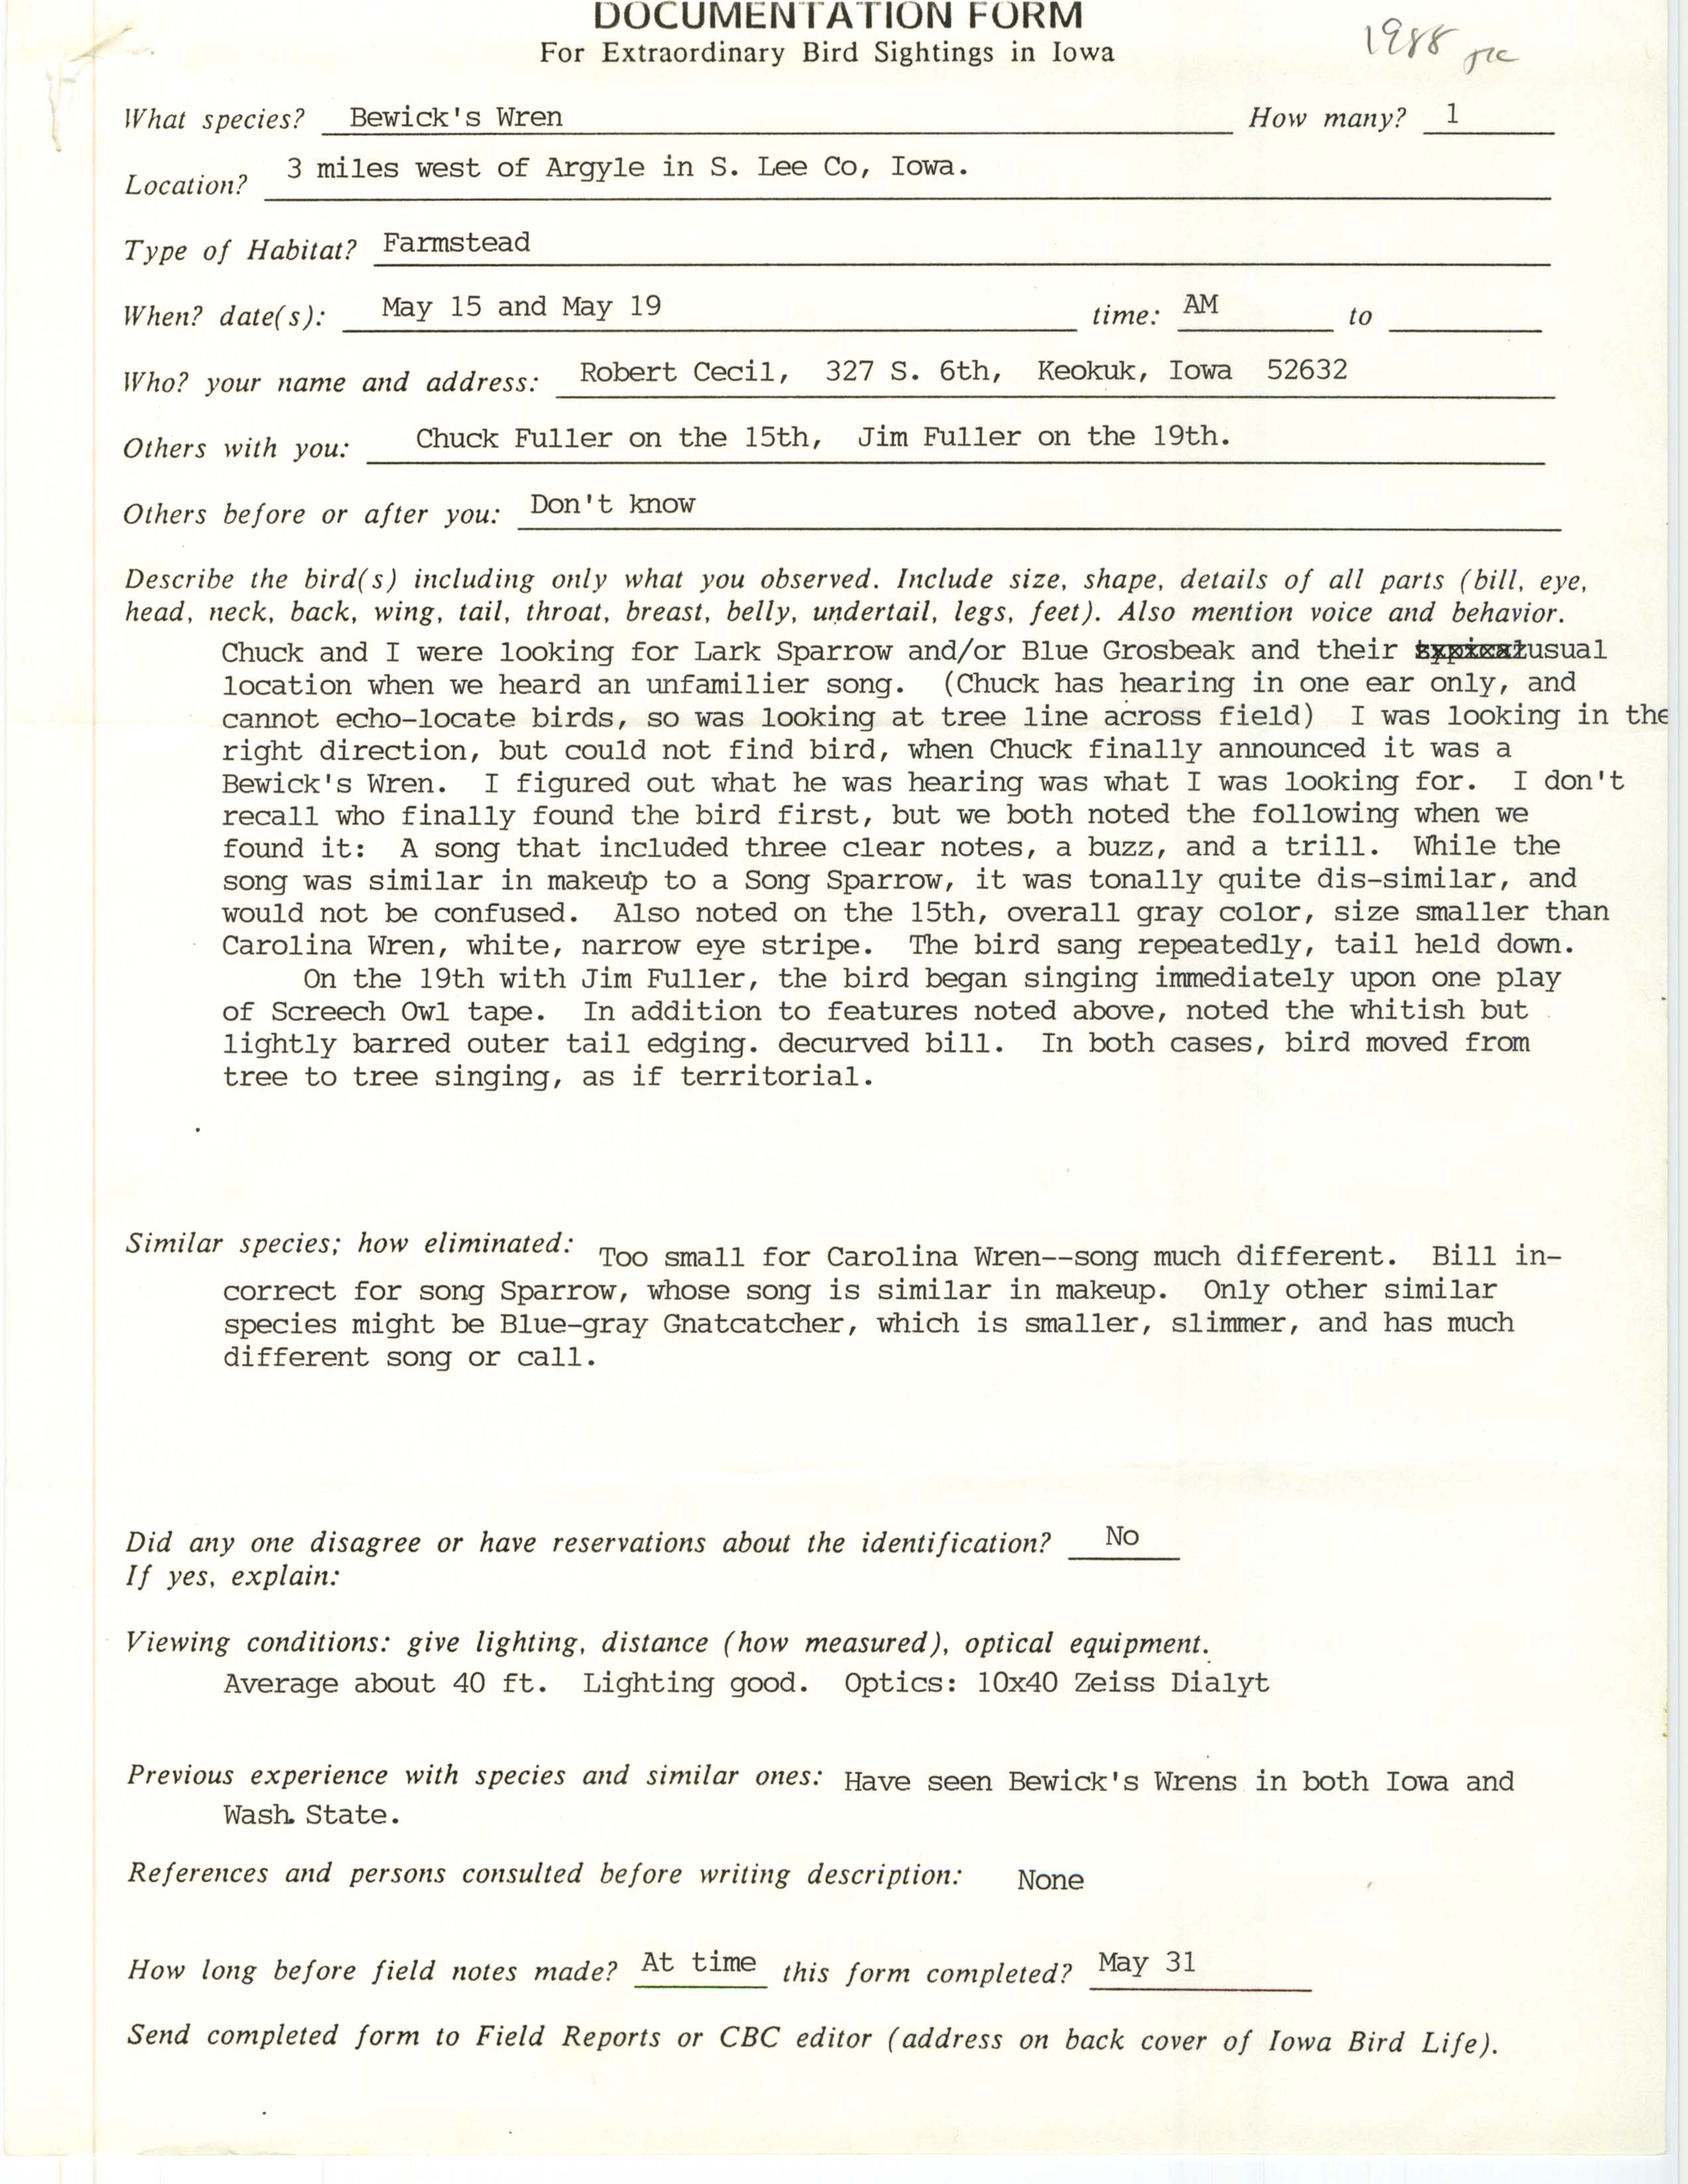 Rare bird documentation form for Bewick's Wren west of Argyle in 1988